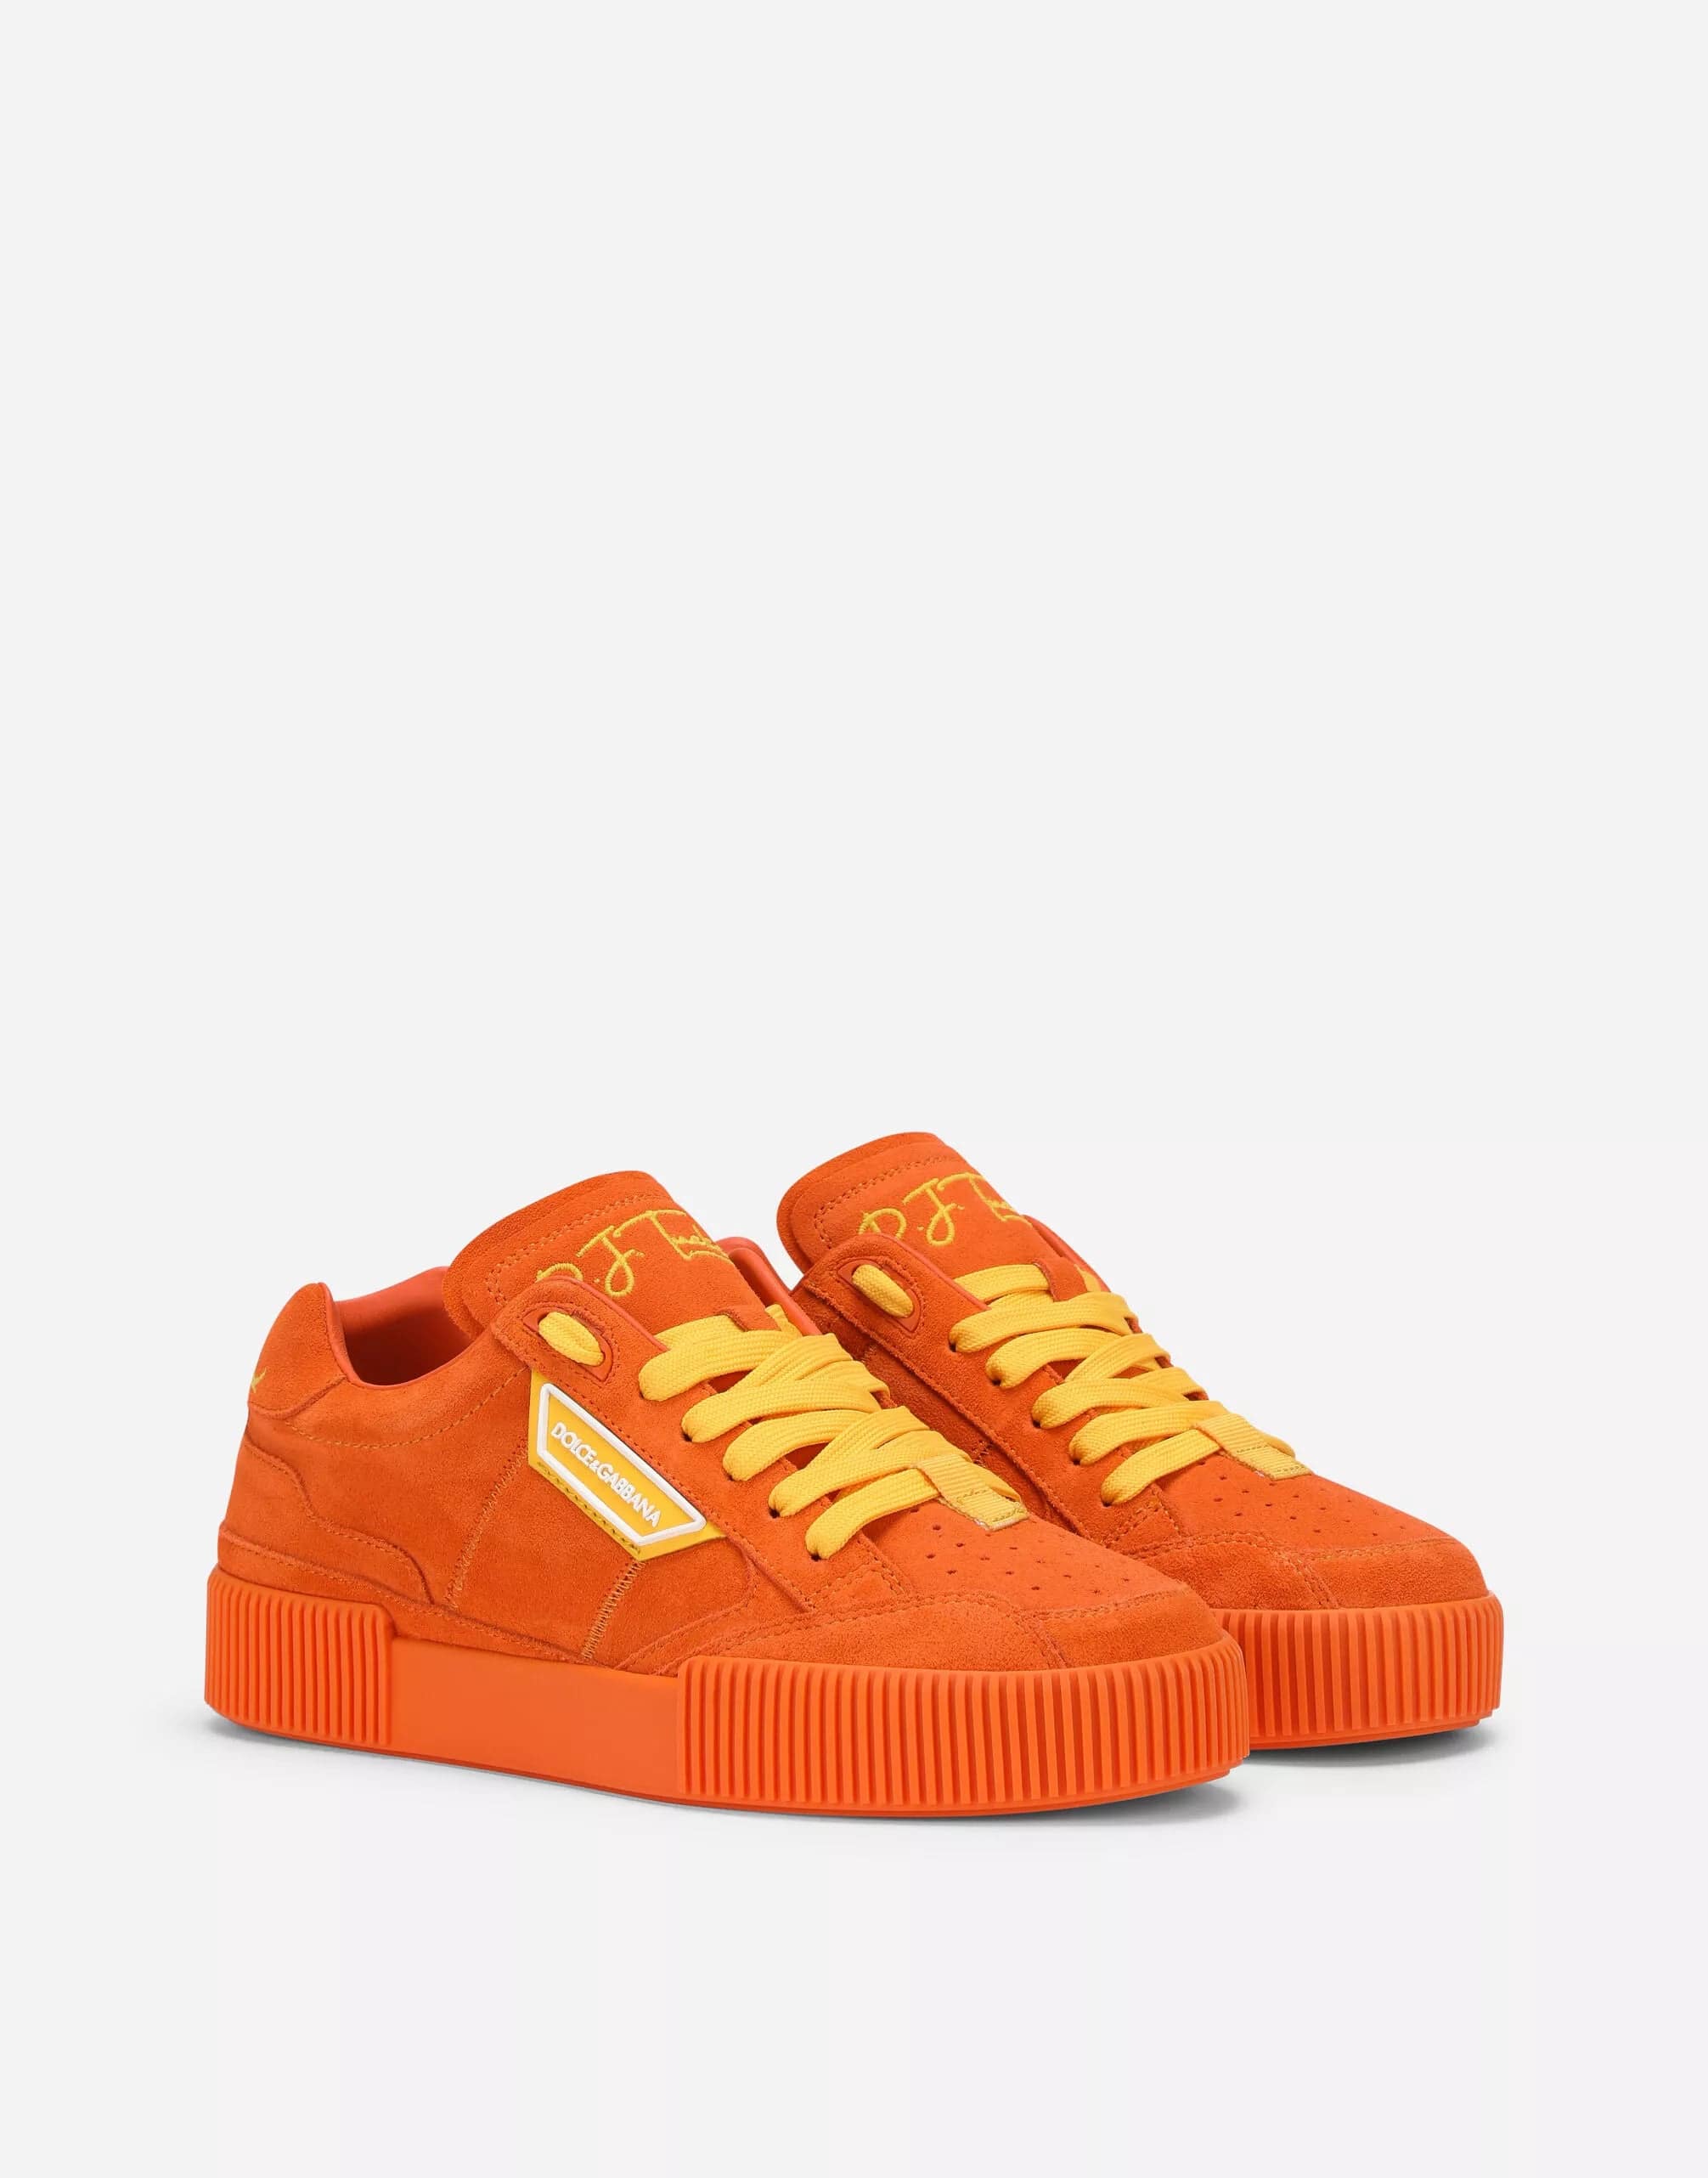 Dolce & Gabbana Orange Leather P.j. Tucker Sneakers Shoes